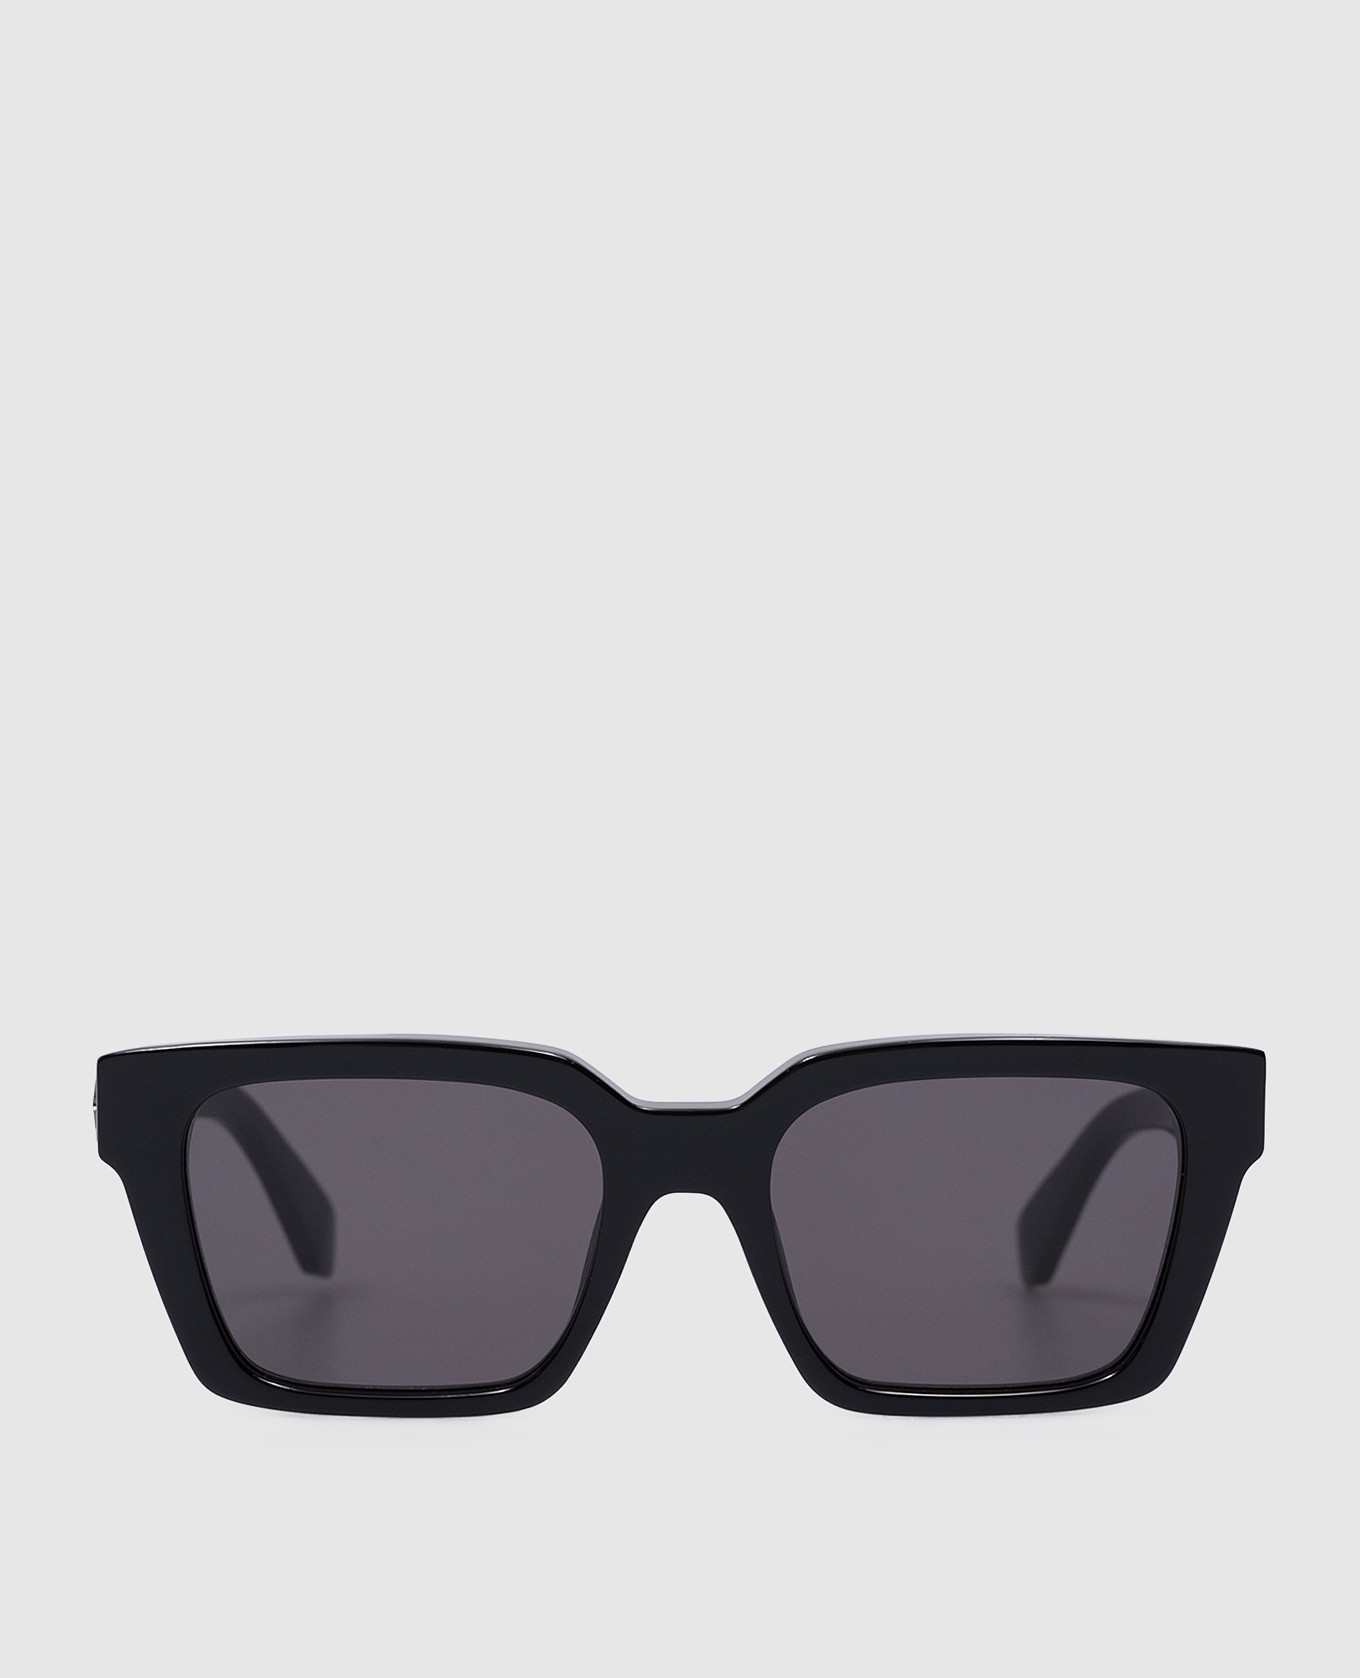 Branson Black Sunglasses